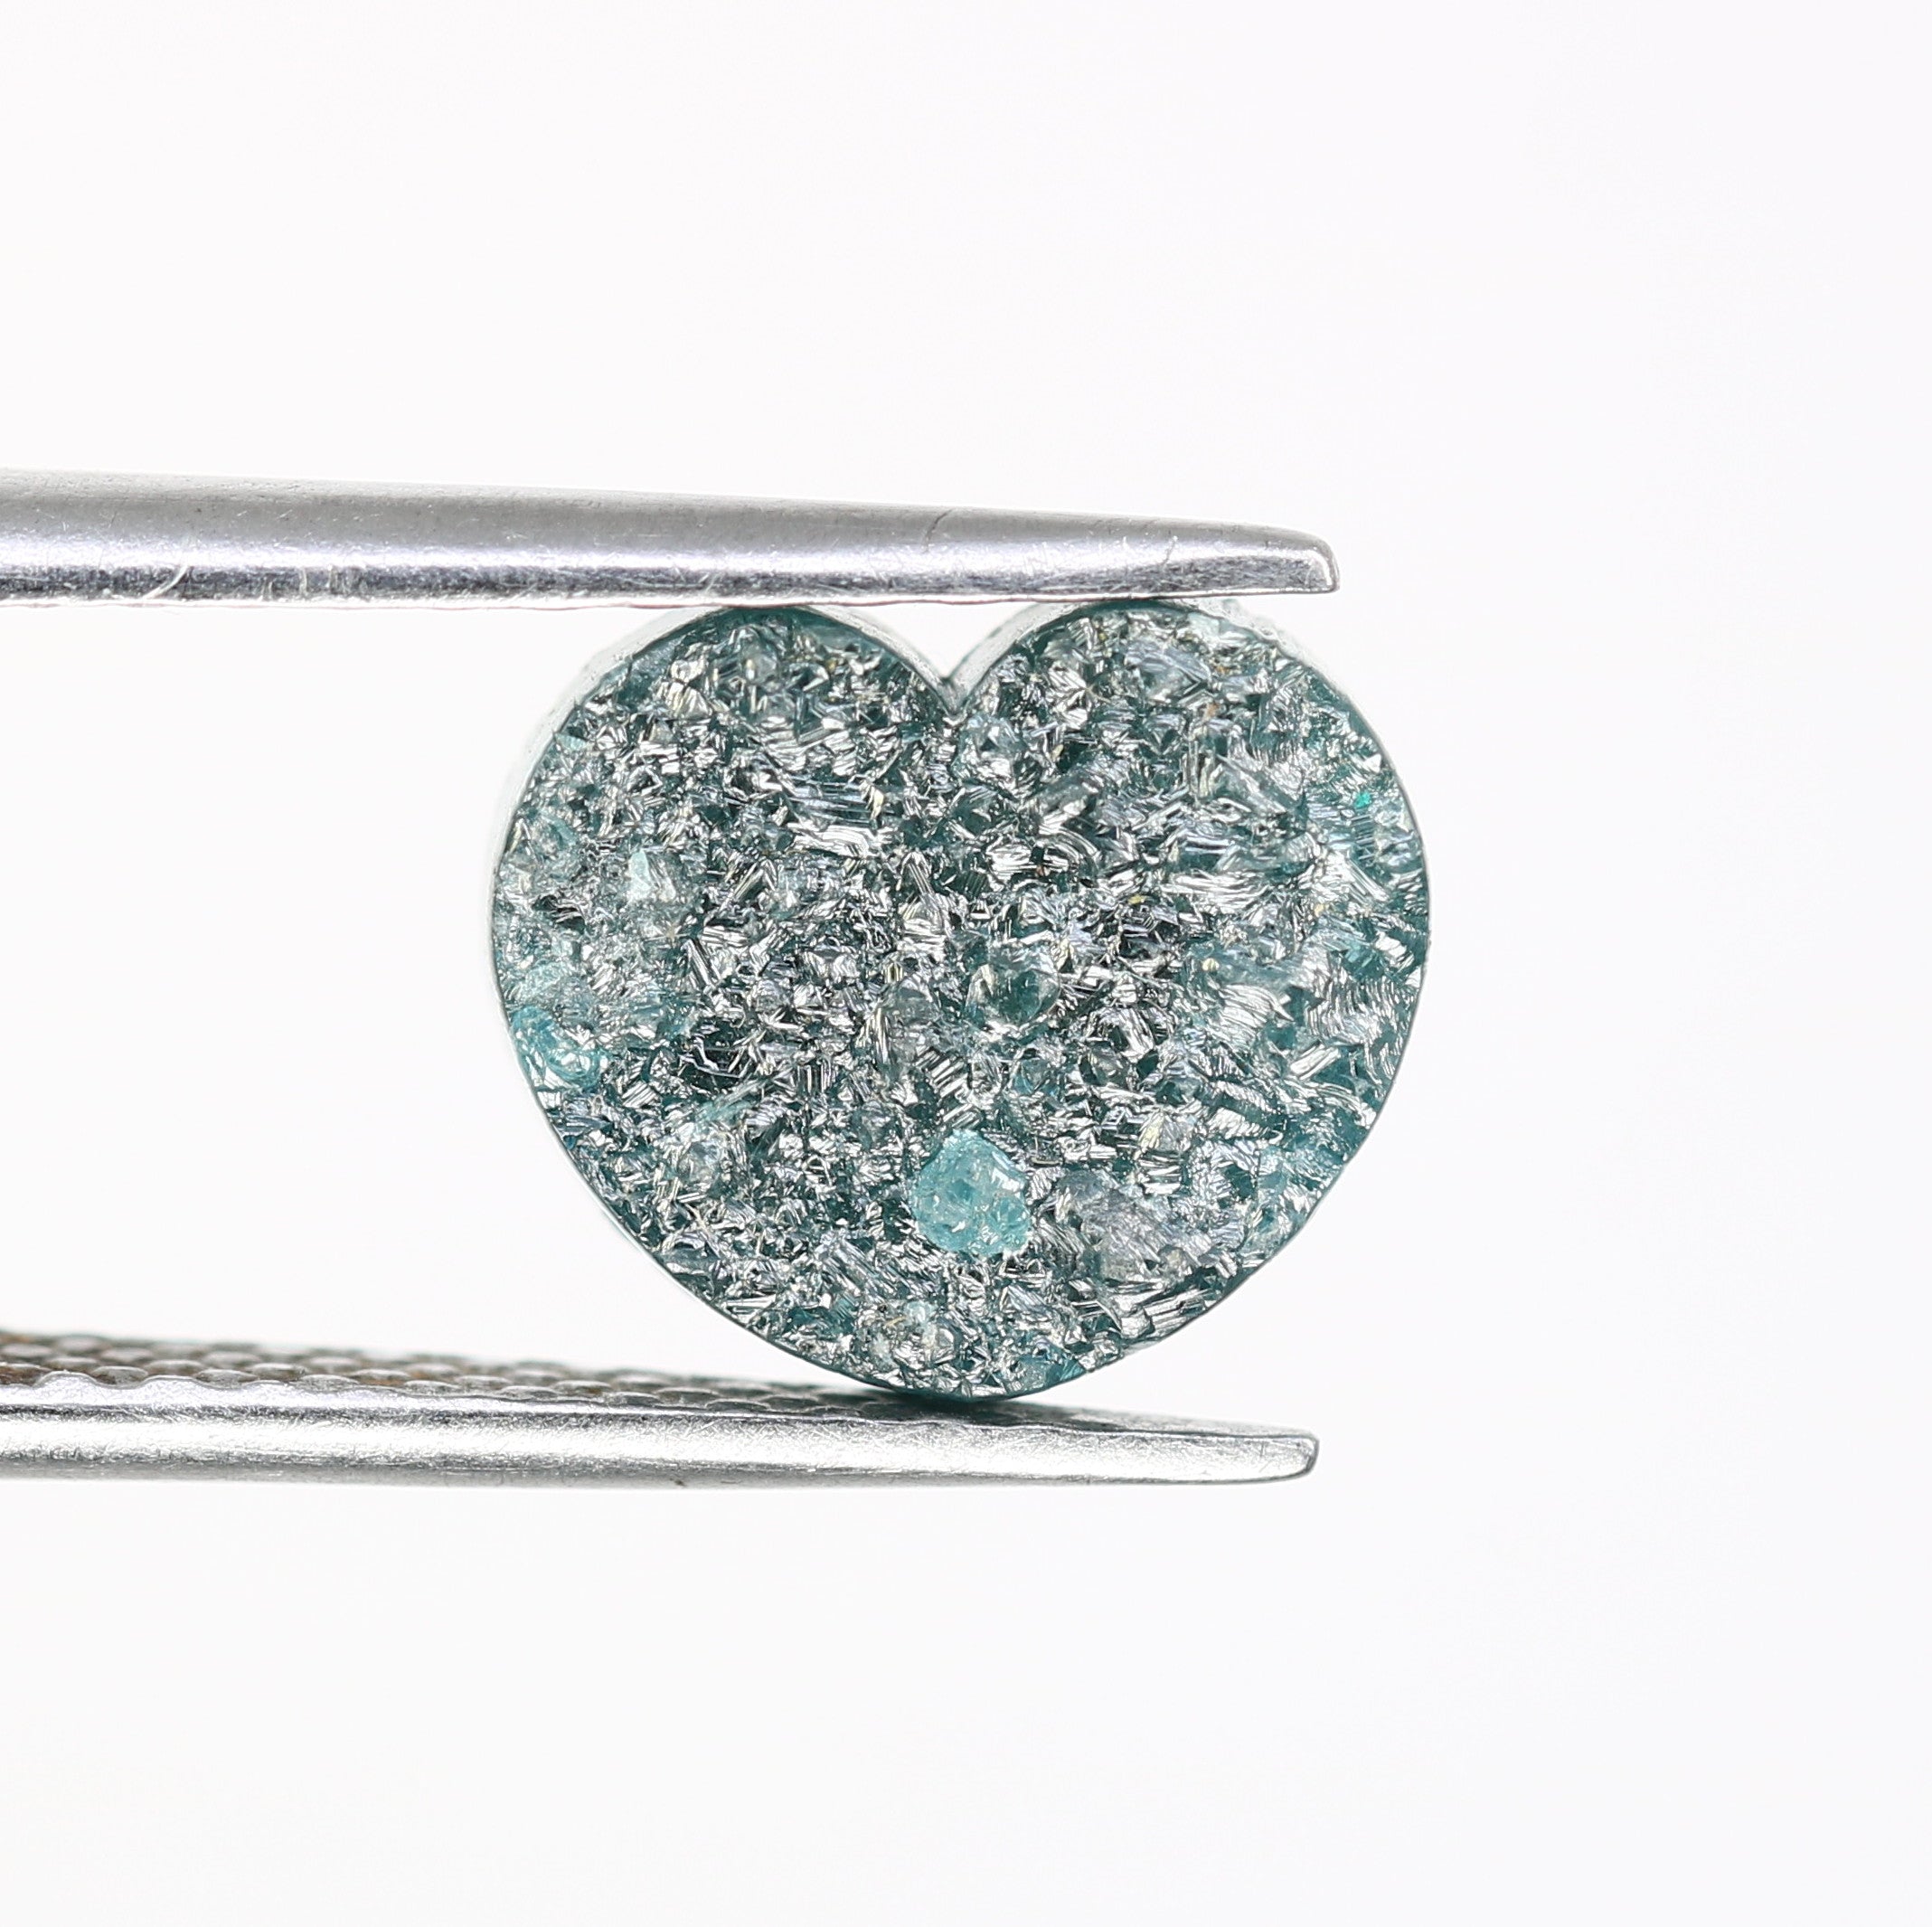 2.91 Carat Blue Fancy Heart Shaped Rough Diamond For Wedding Ring